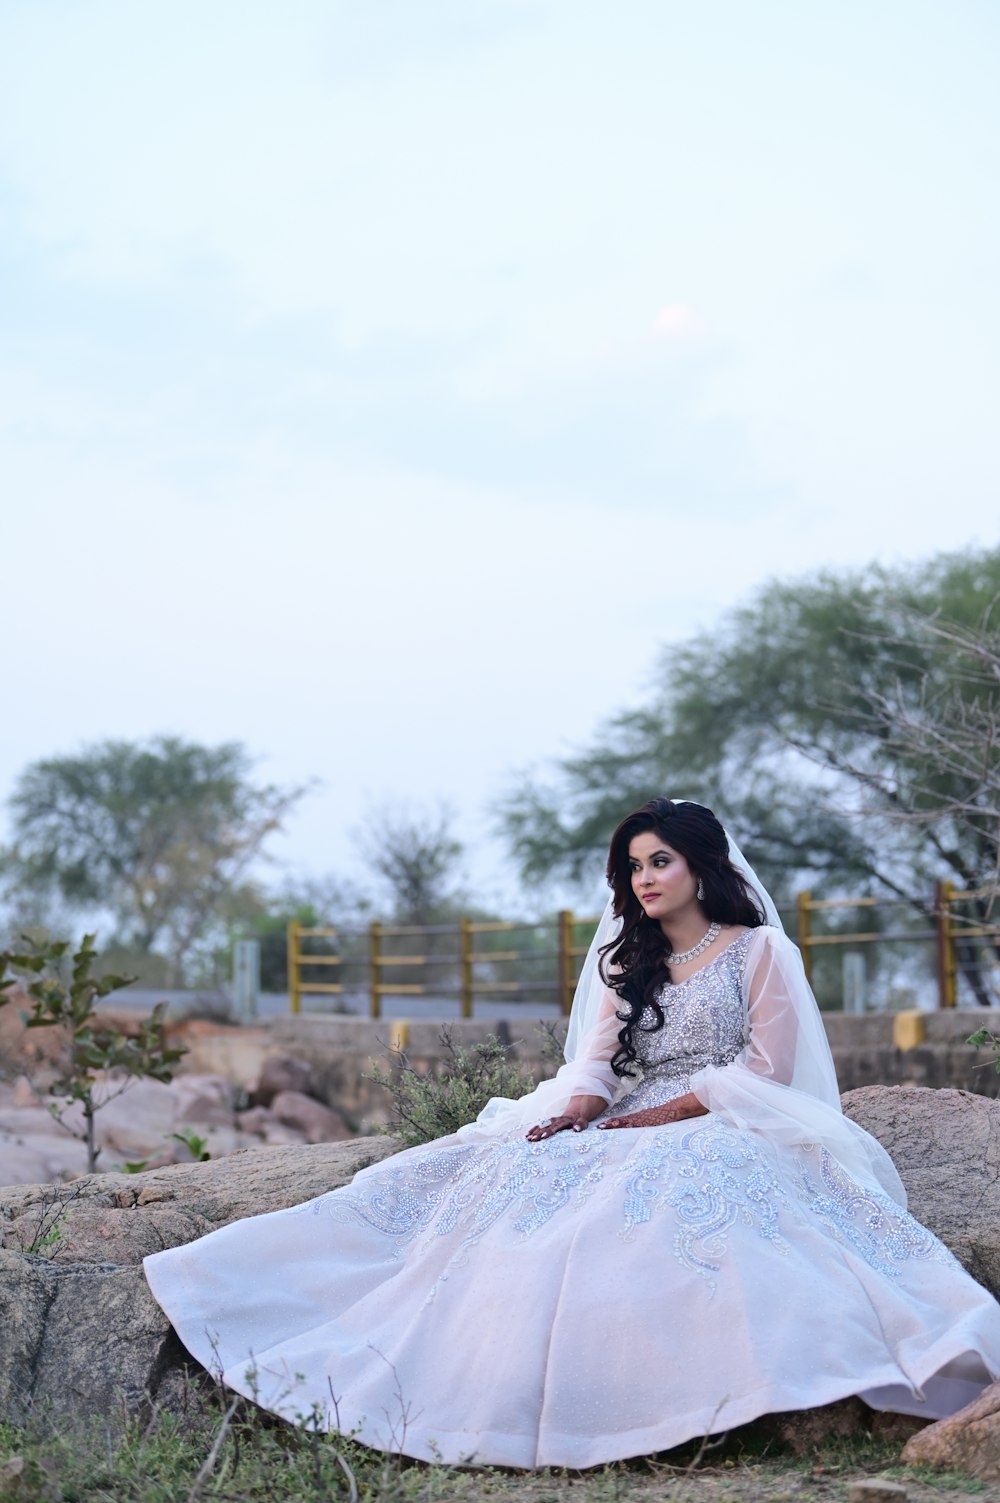 a woman in a wedding dress sitting on a rock